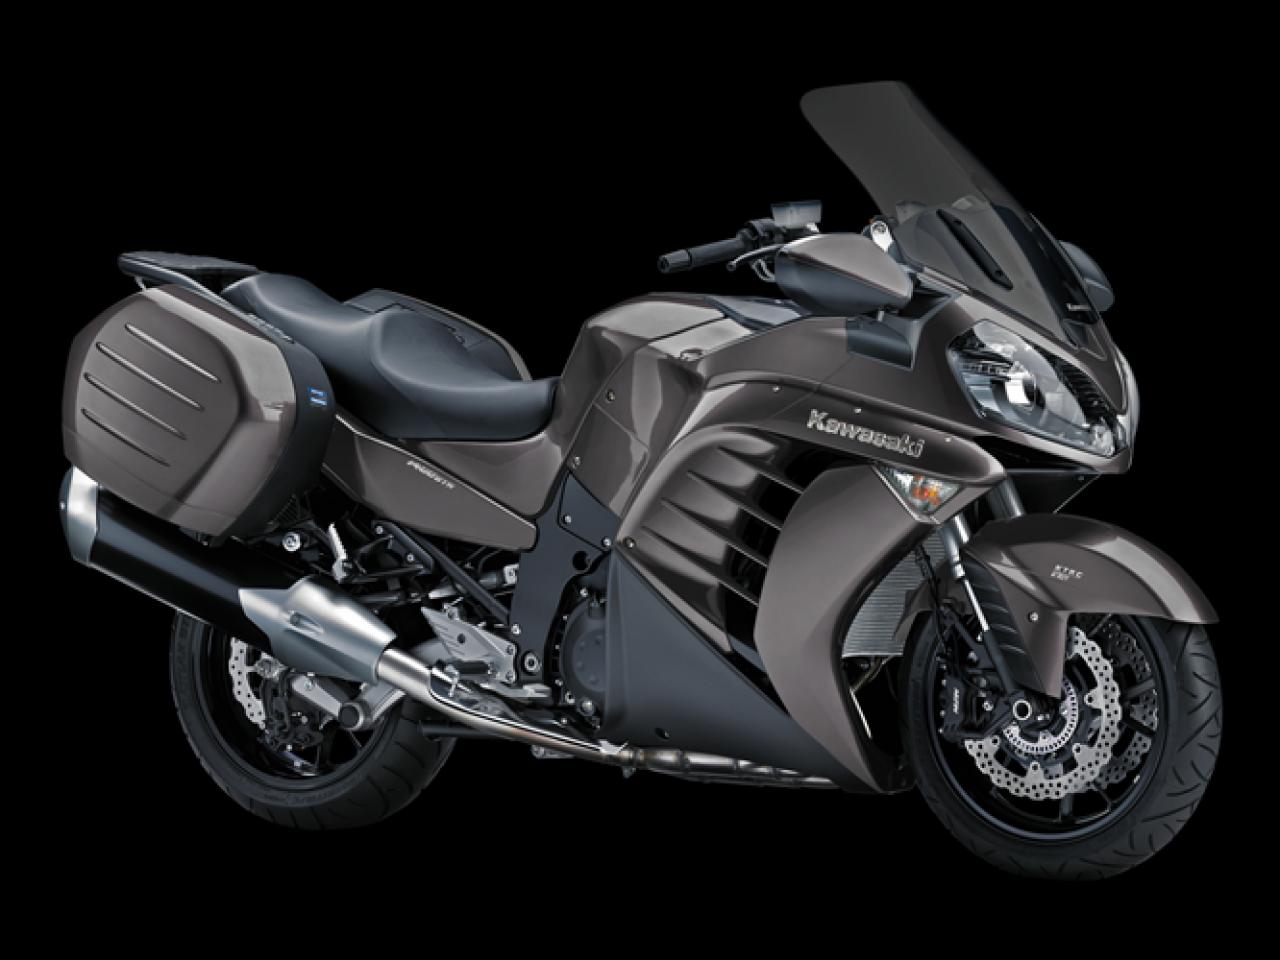 officiel mavepine mode Kawasaki Kawasaki 1400 GTR - Moto.ZombDrive.COM